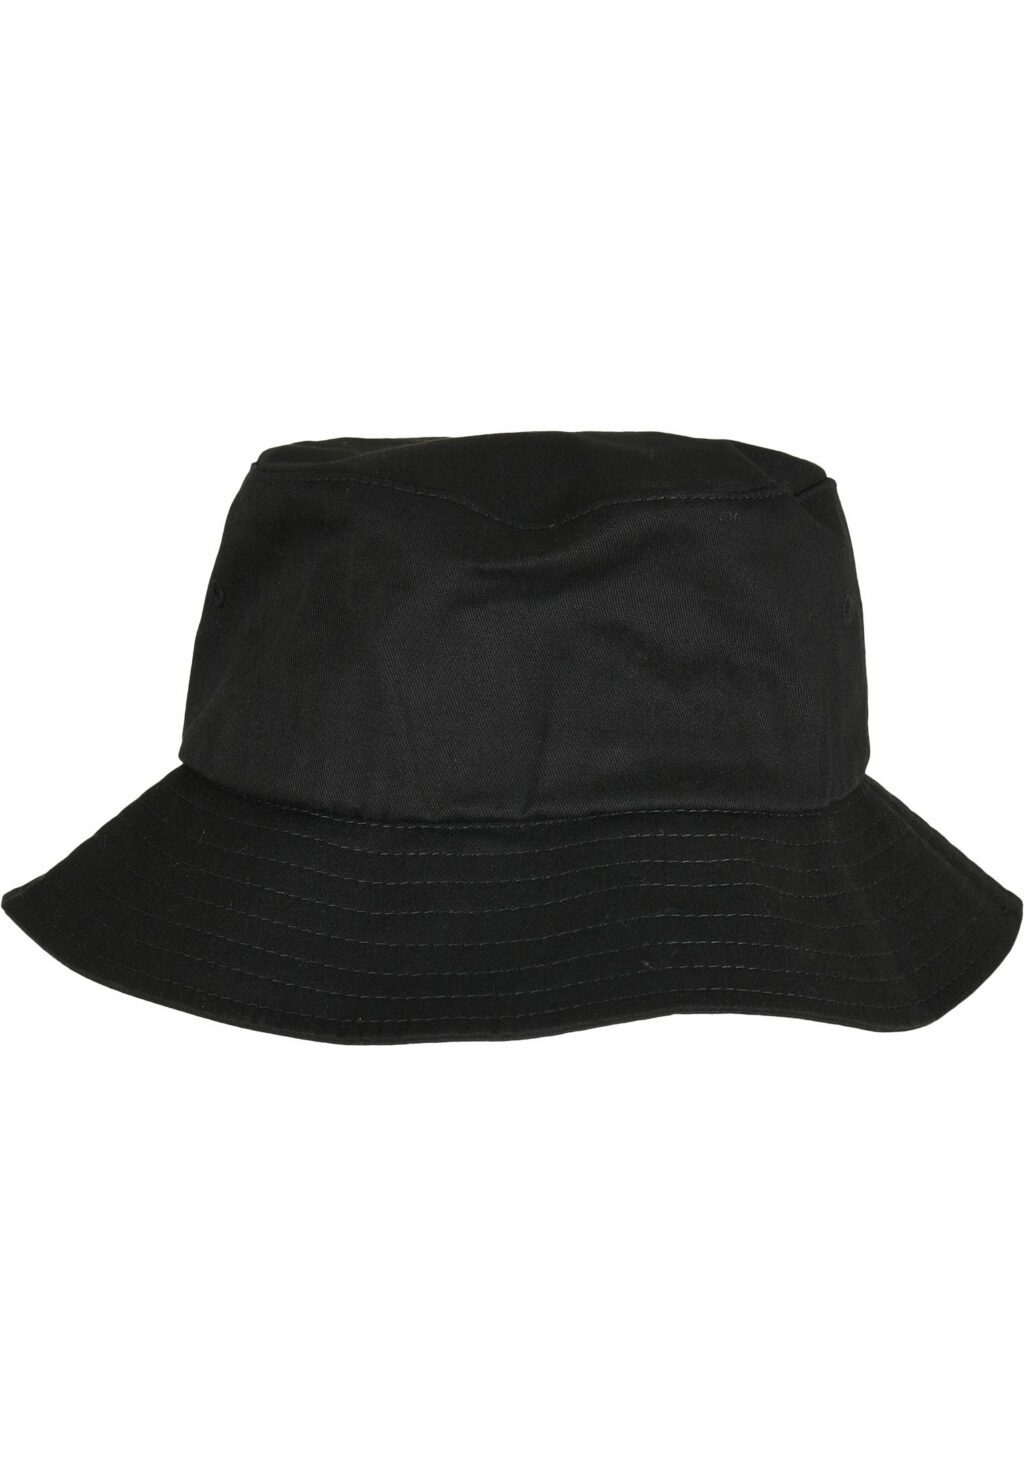 Miami Vice Print Bucket Hat black one MC756